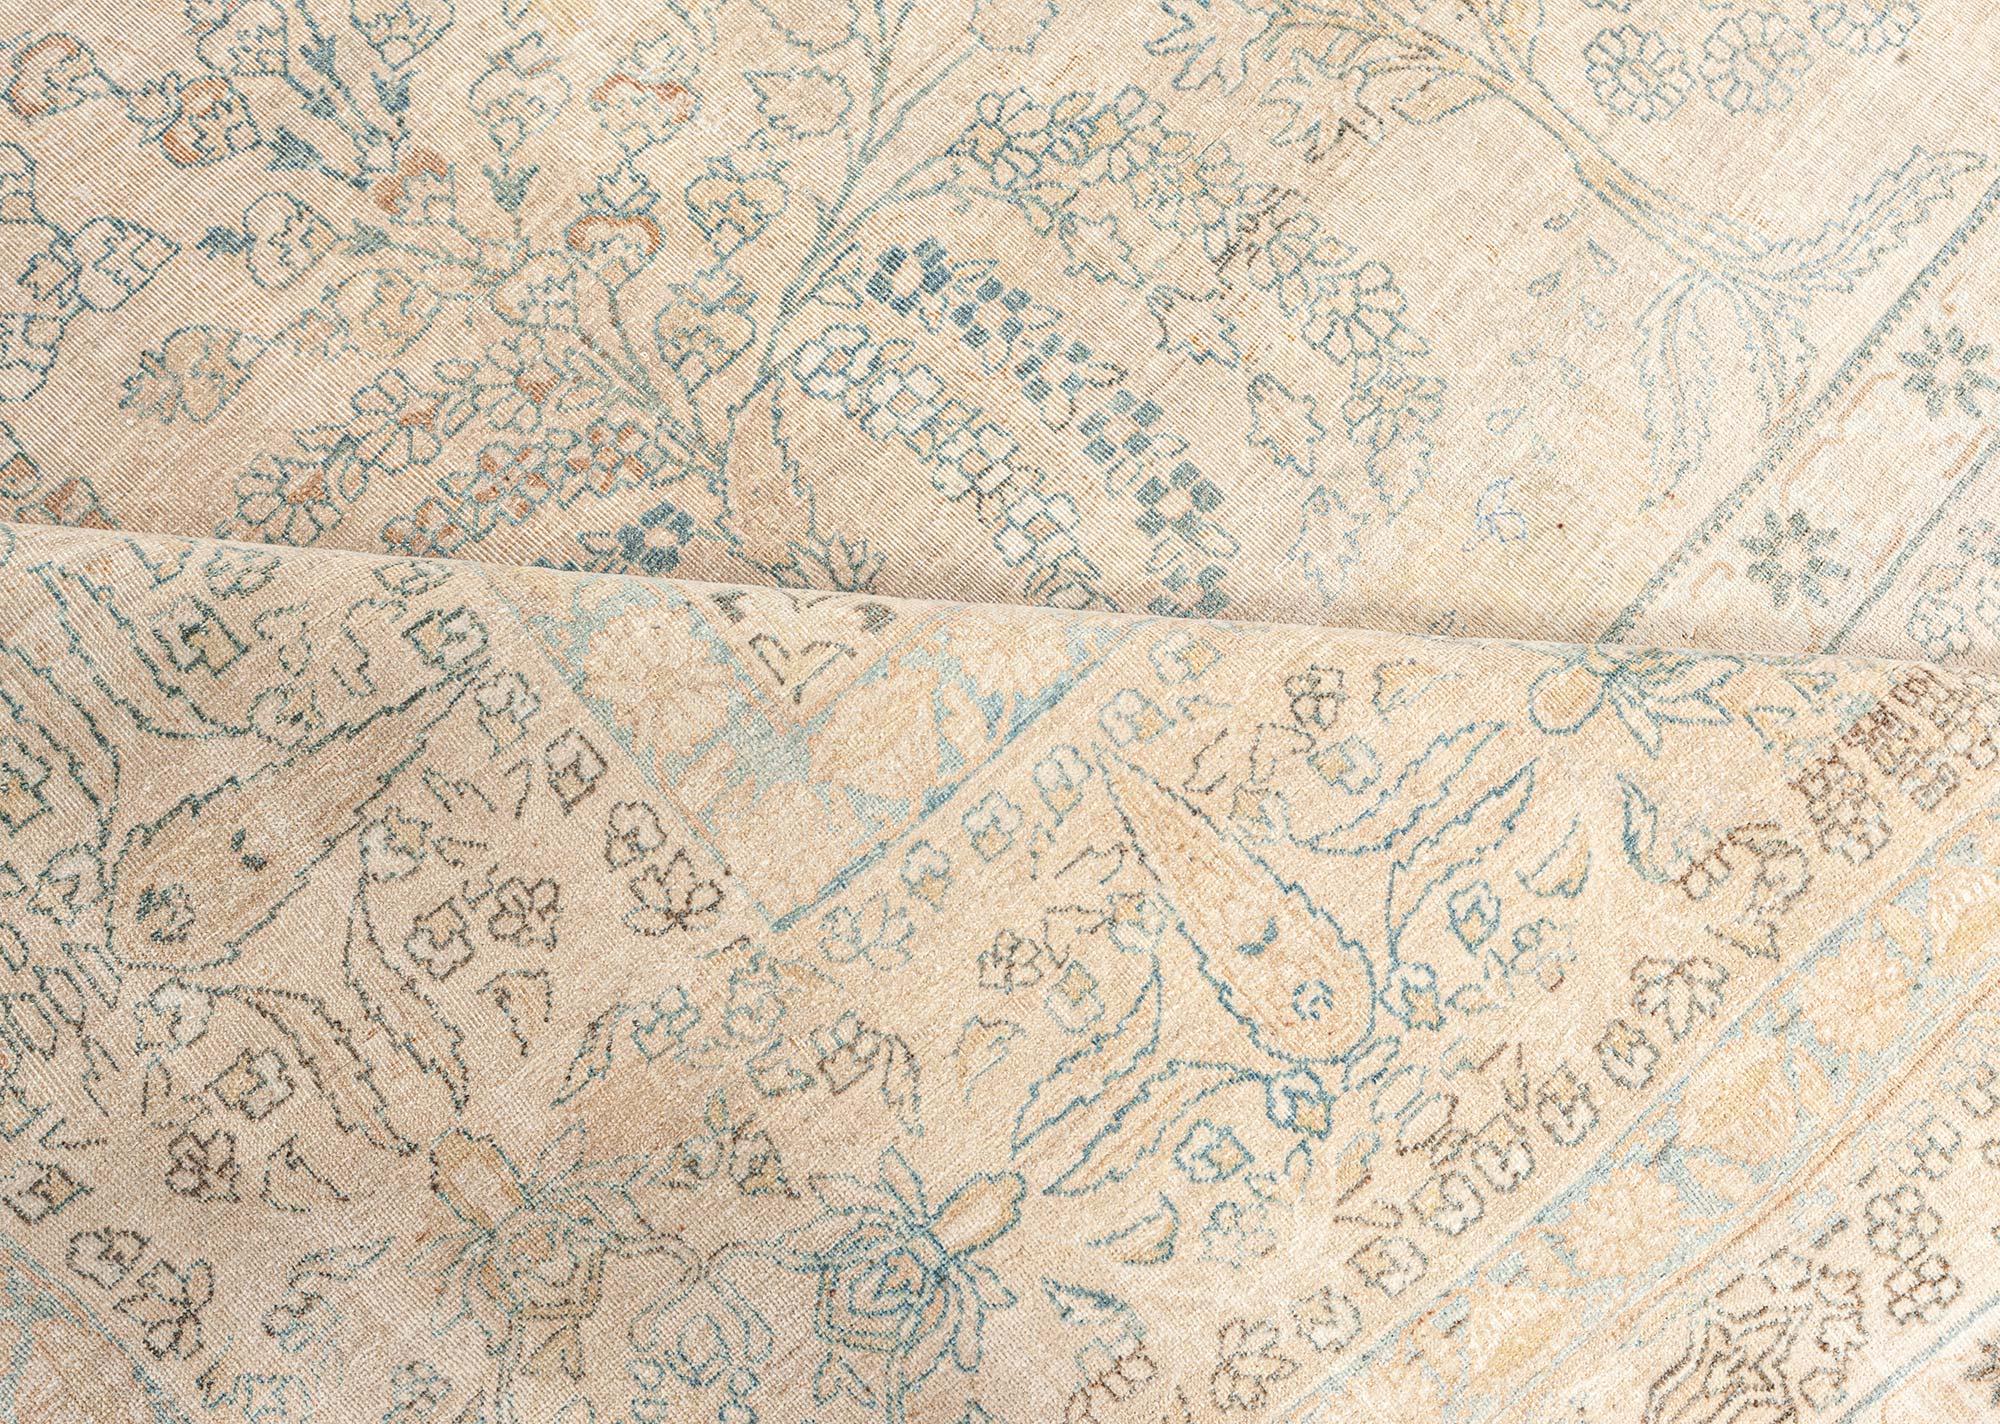 Antique Persian Kirman rug
Size: 11'3